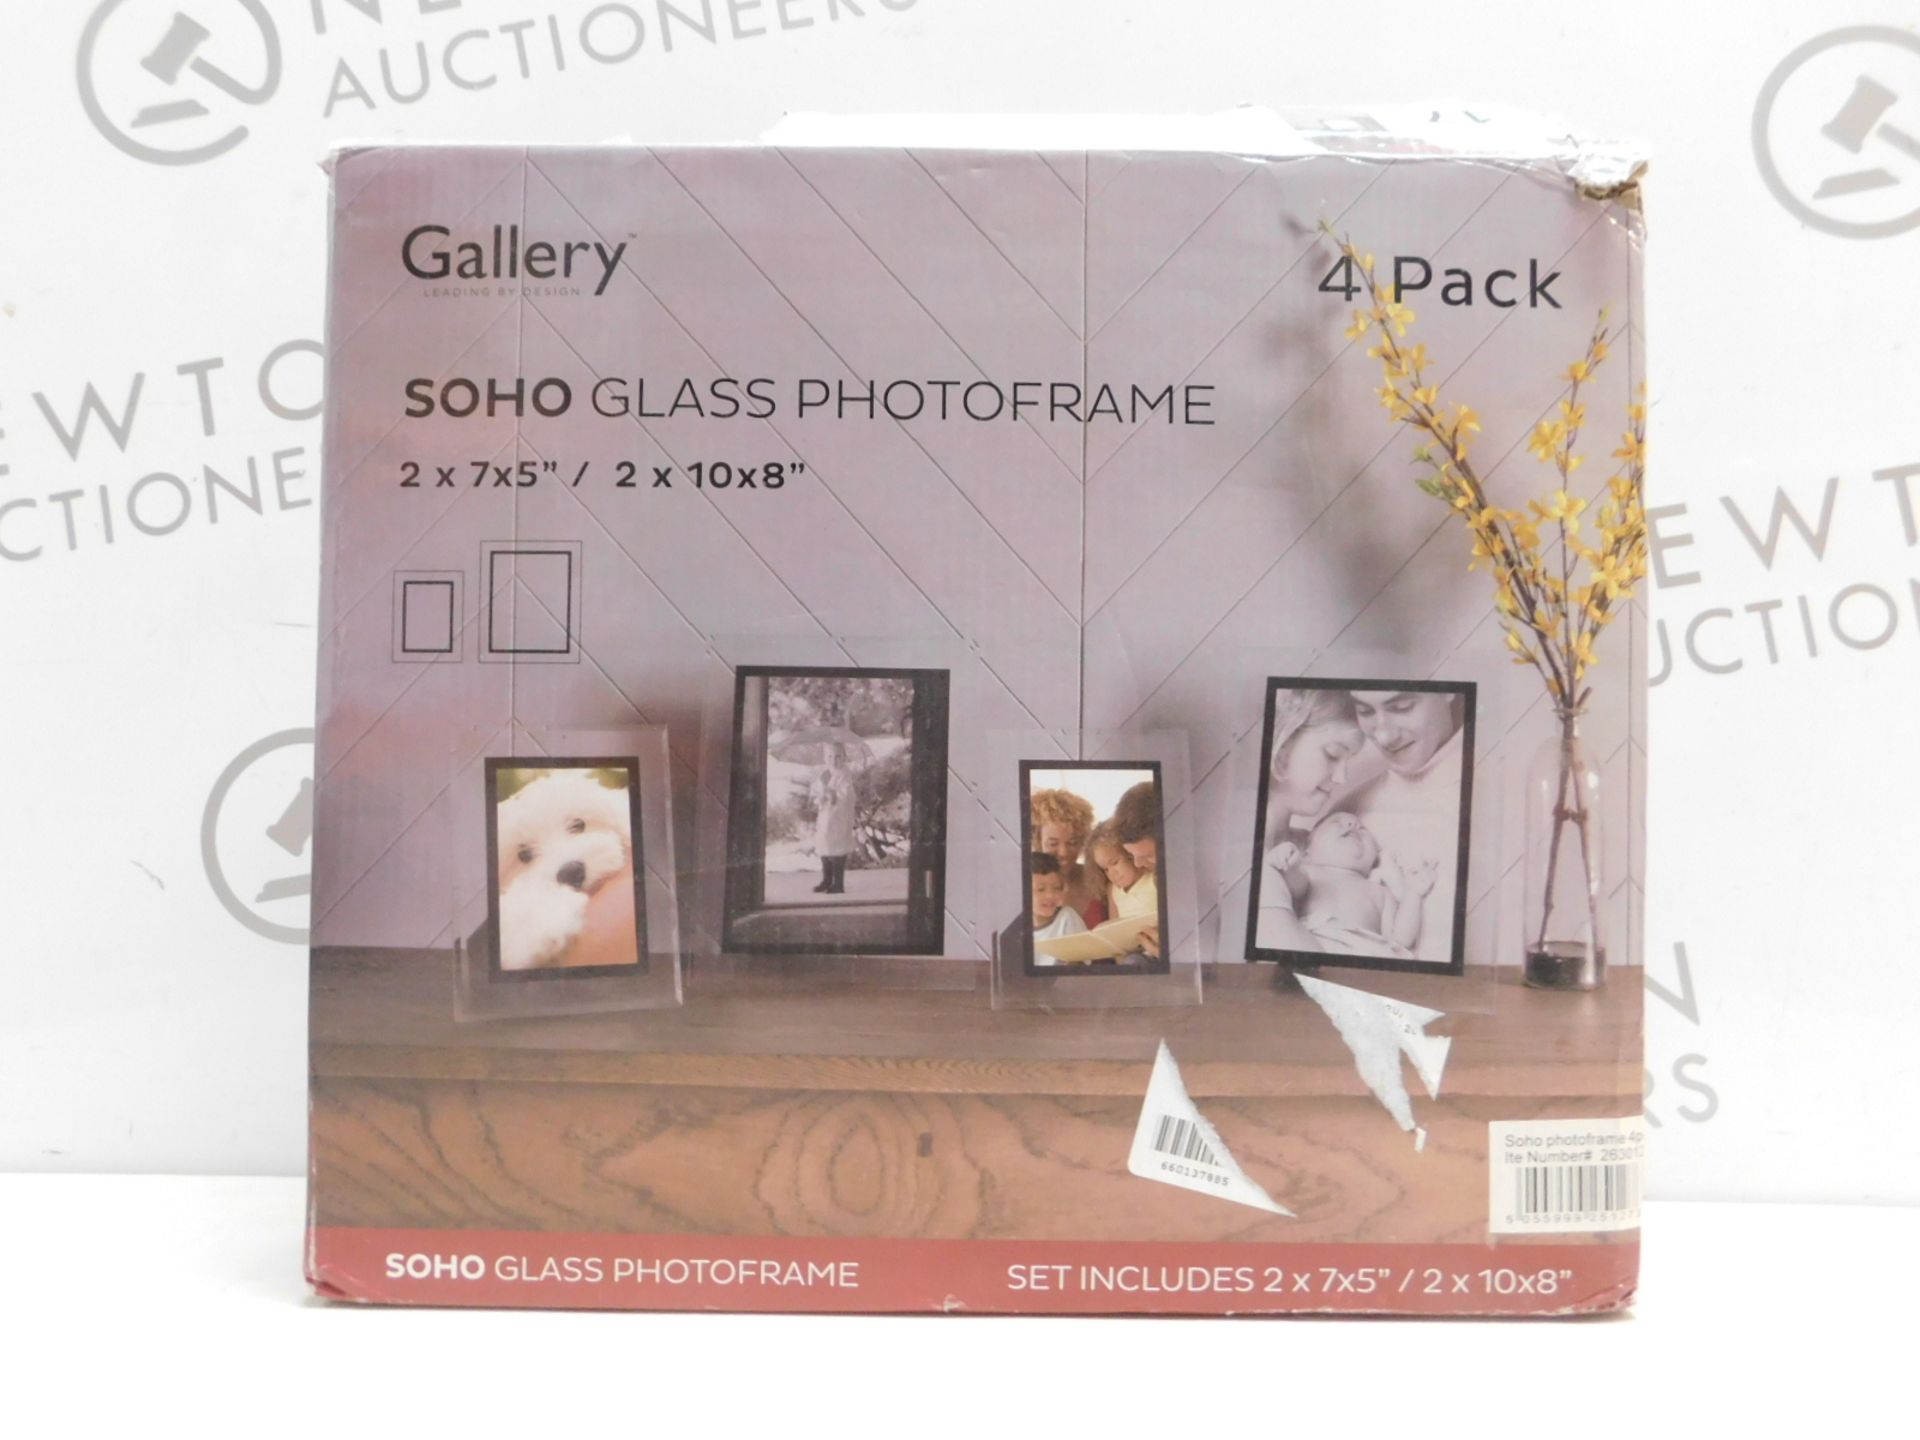 1 BOXED GALLERY SOHO GLASS PHOTOFRAME RRP Â£39.99